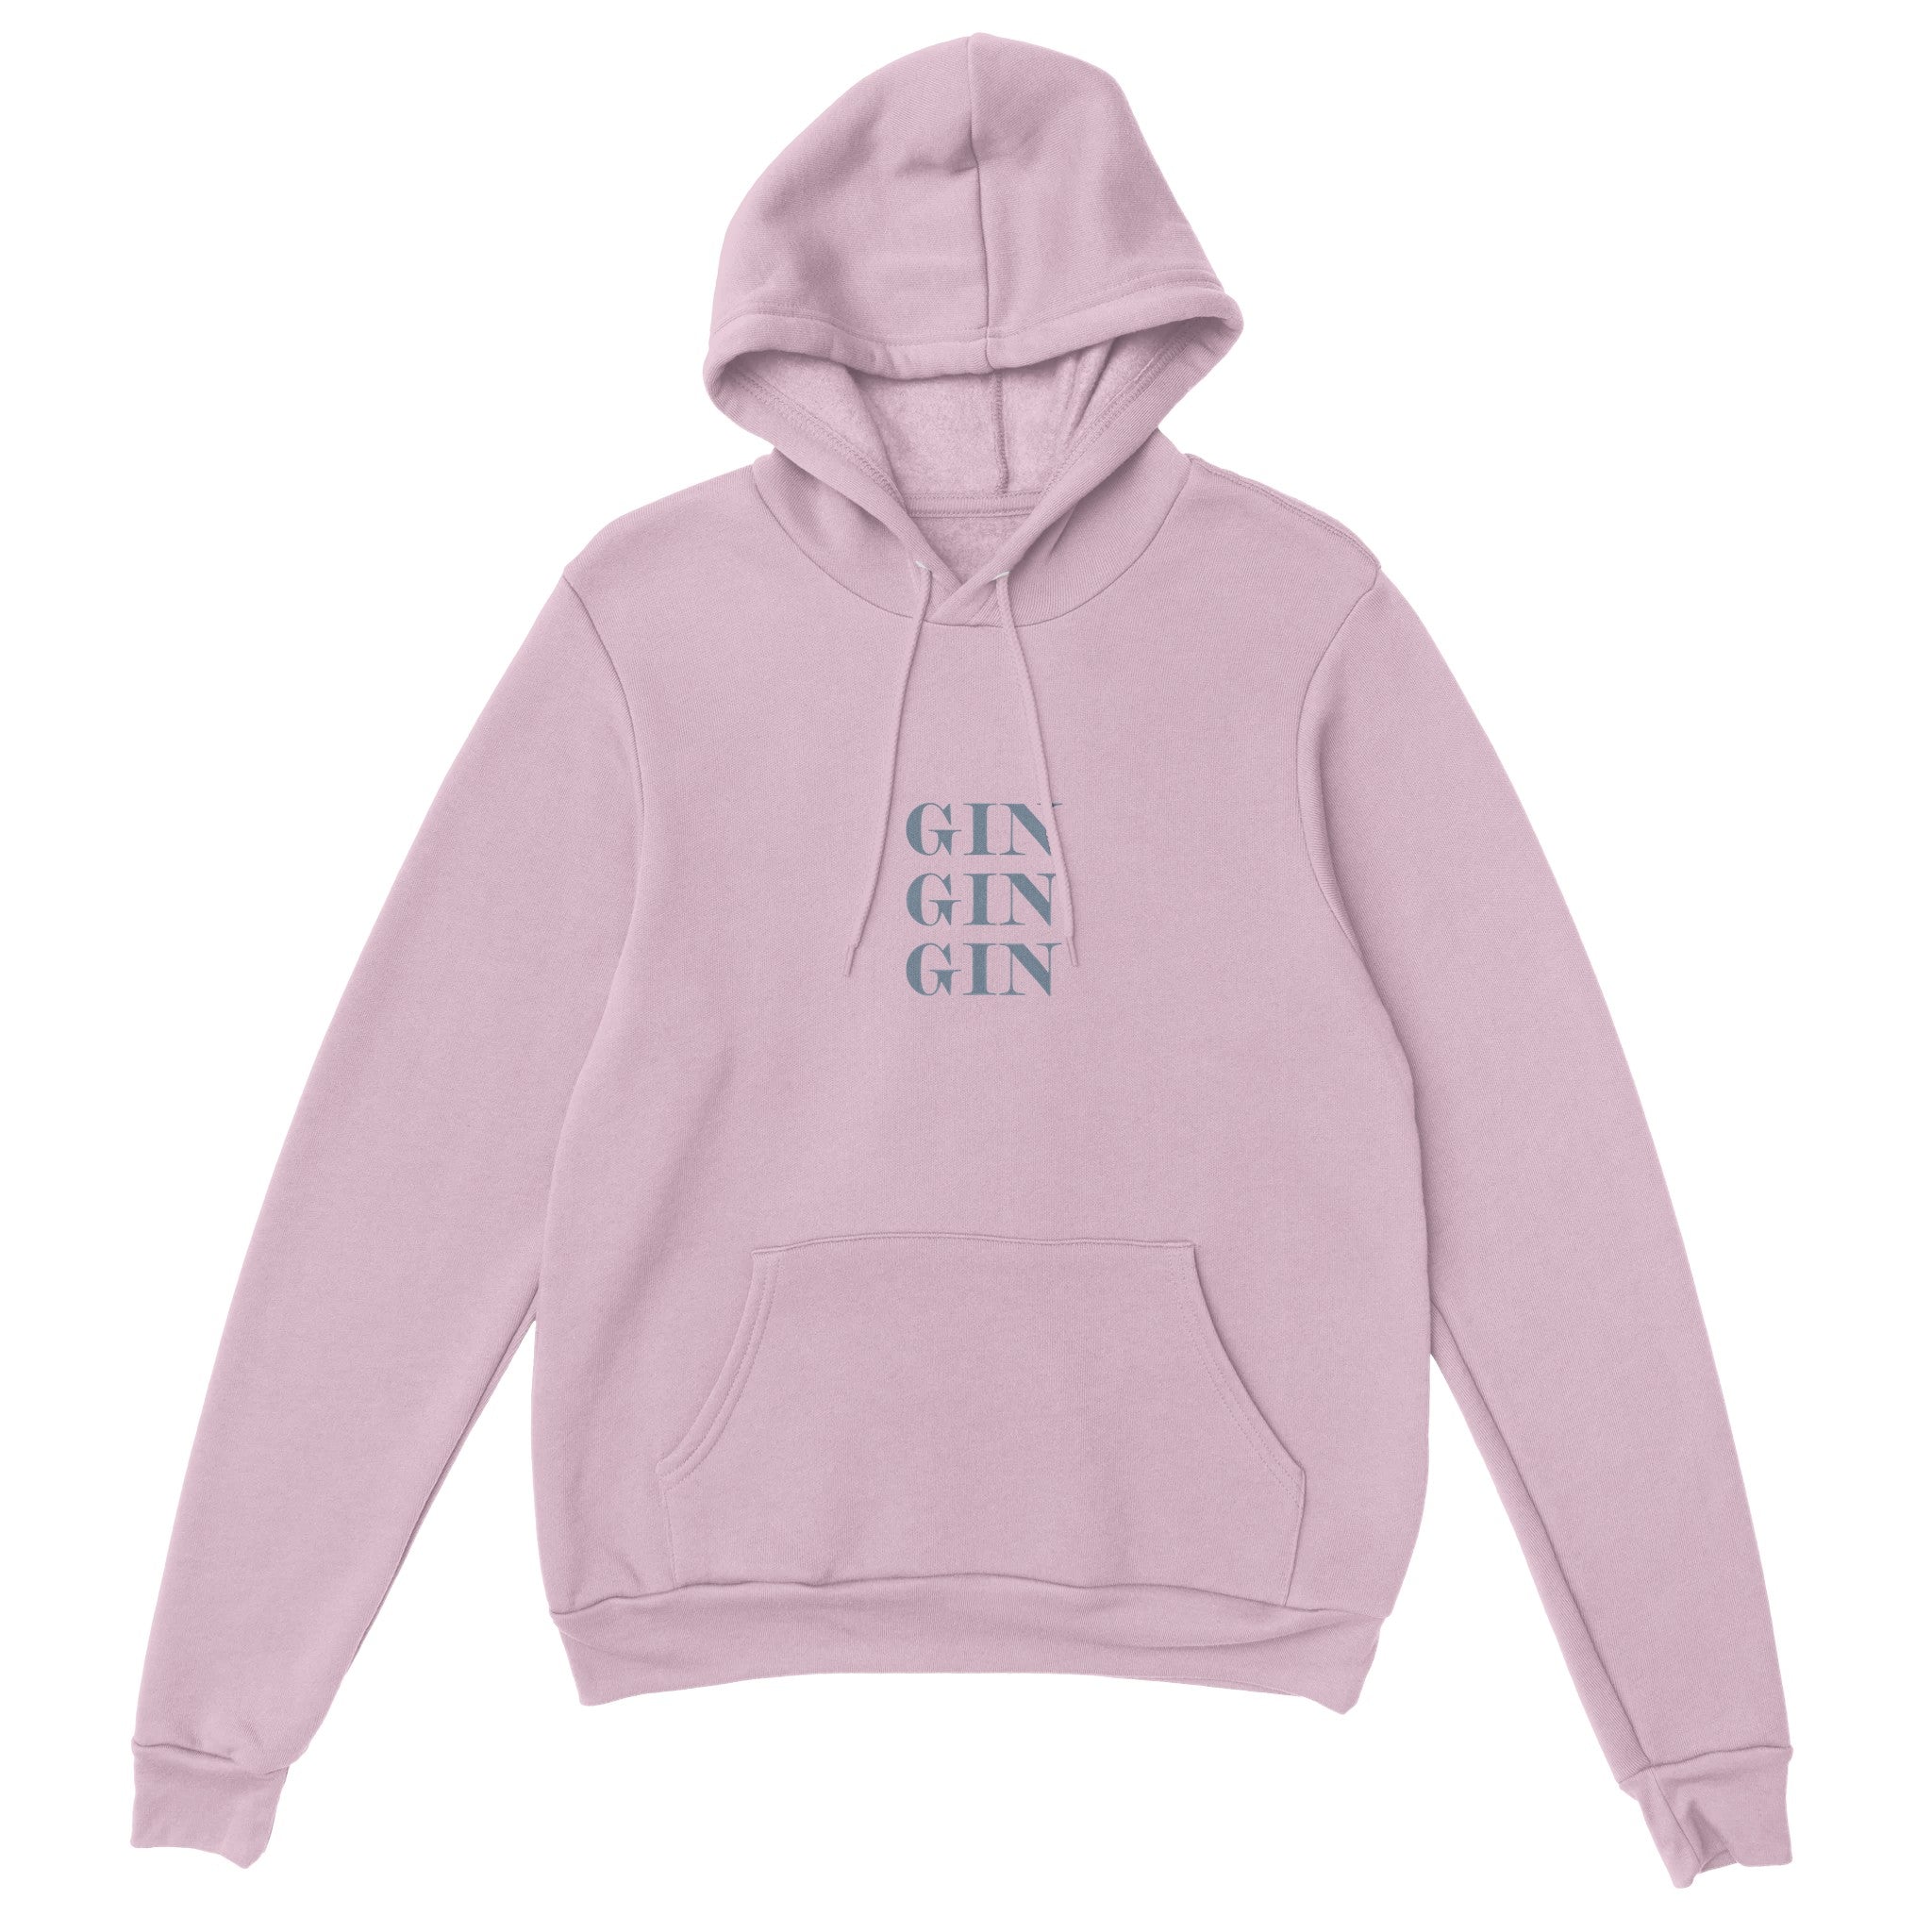 GIN GIN GIN Pullover Hoodie - Optimalprint